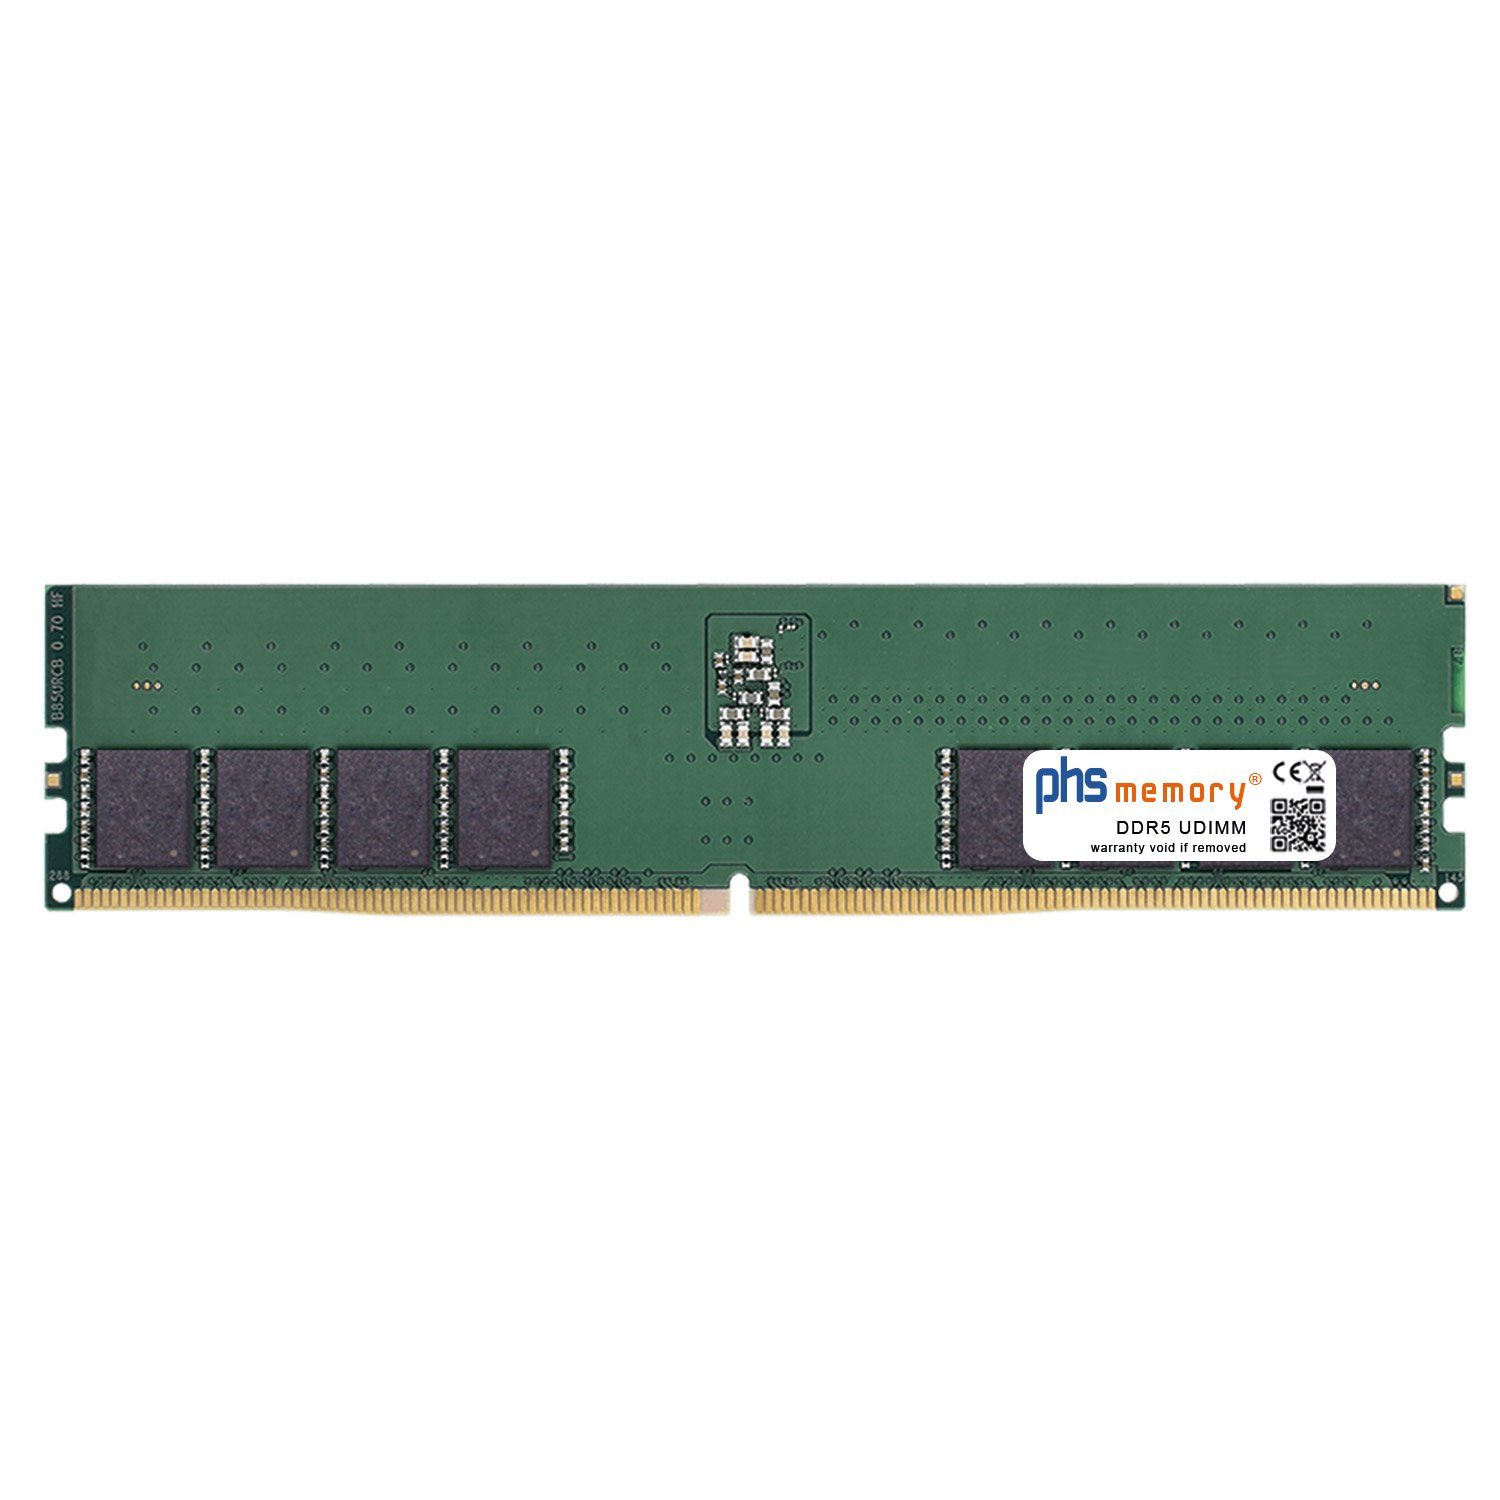 PHS-memory RAM für Captiva Ultimate Gaming I67-841 Arbeitsspeicher